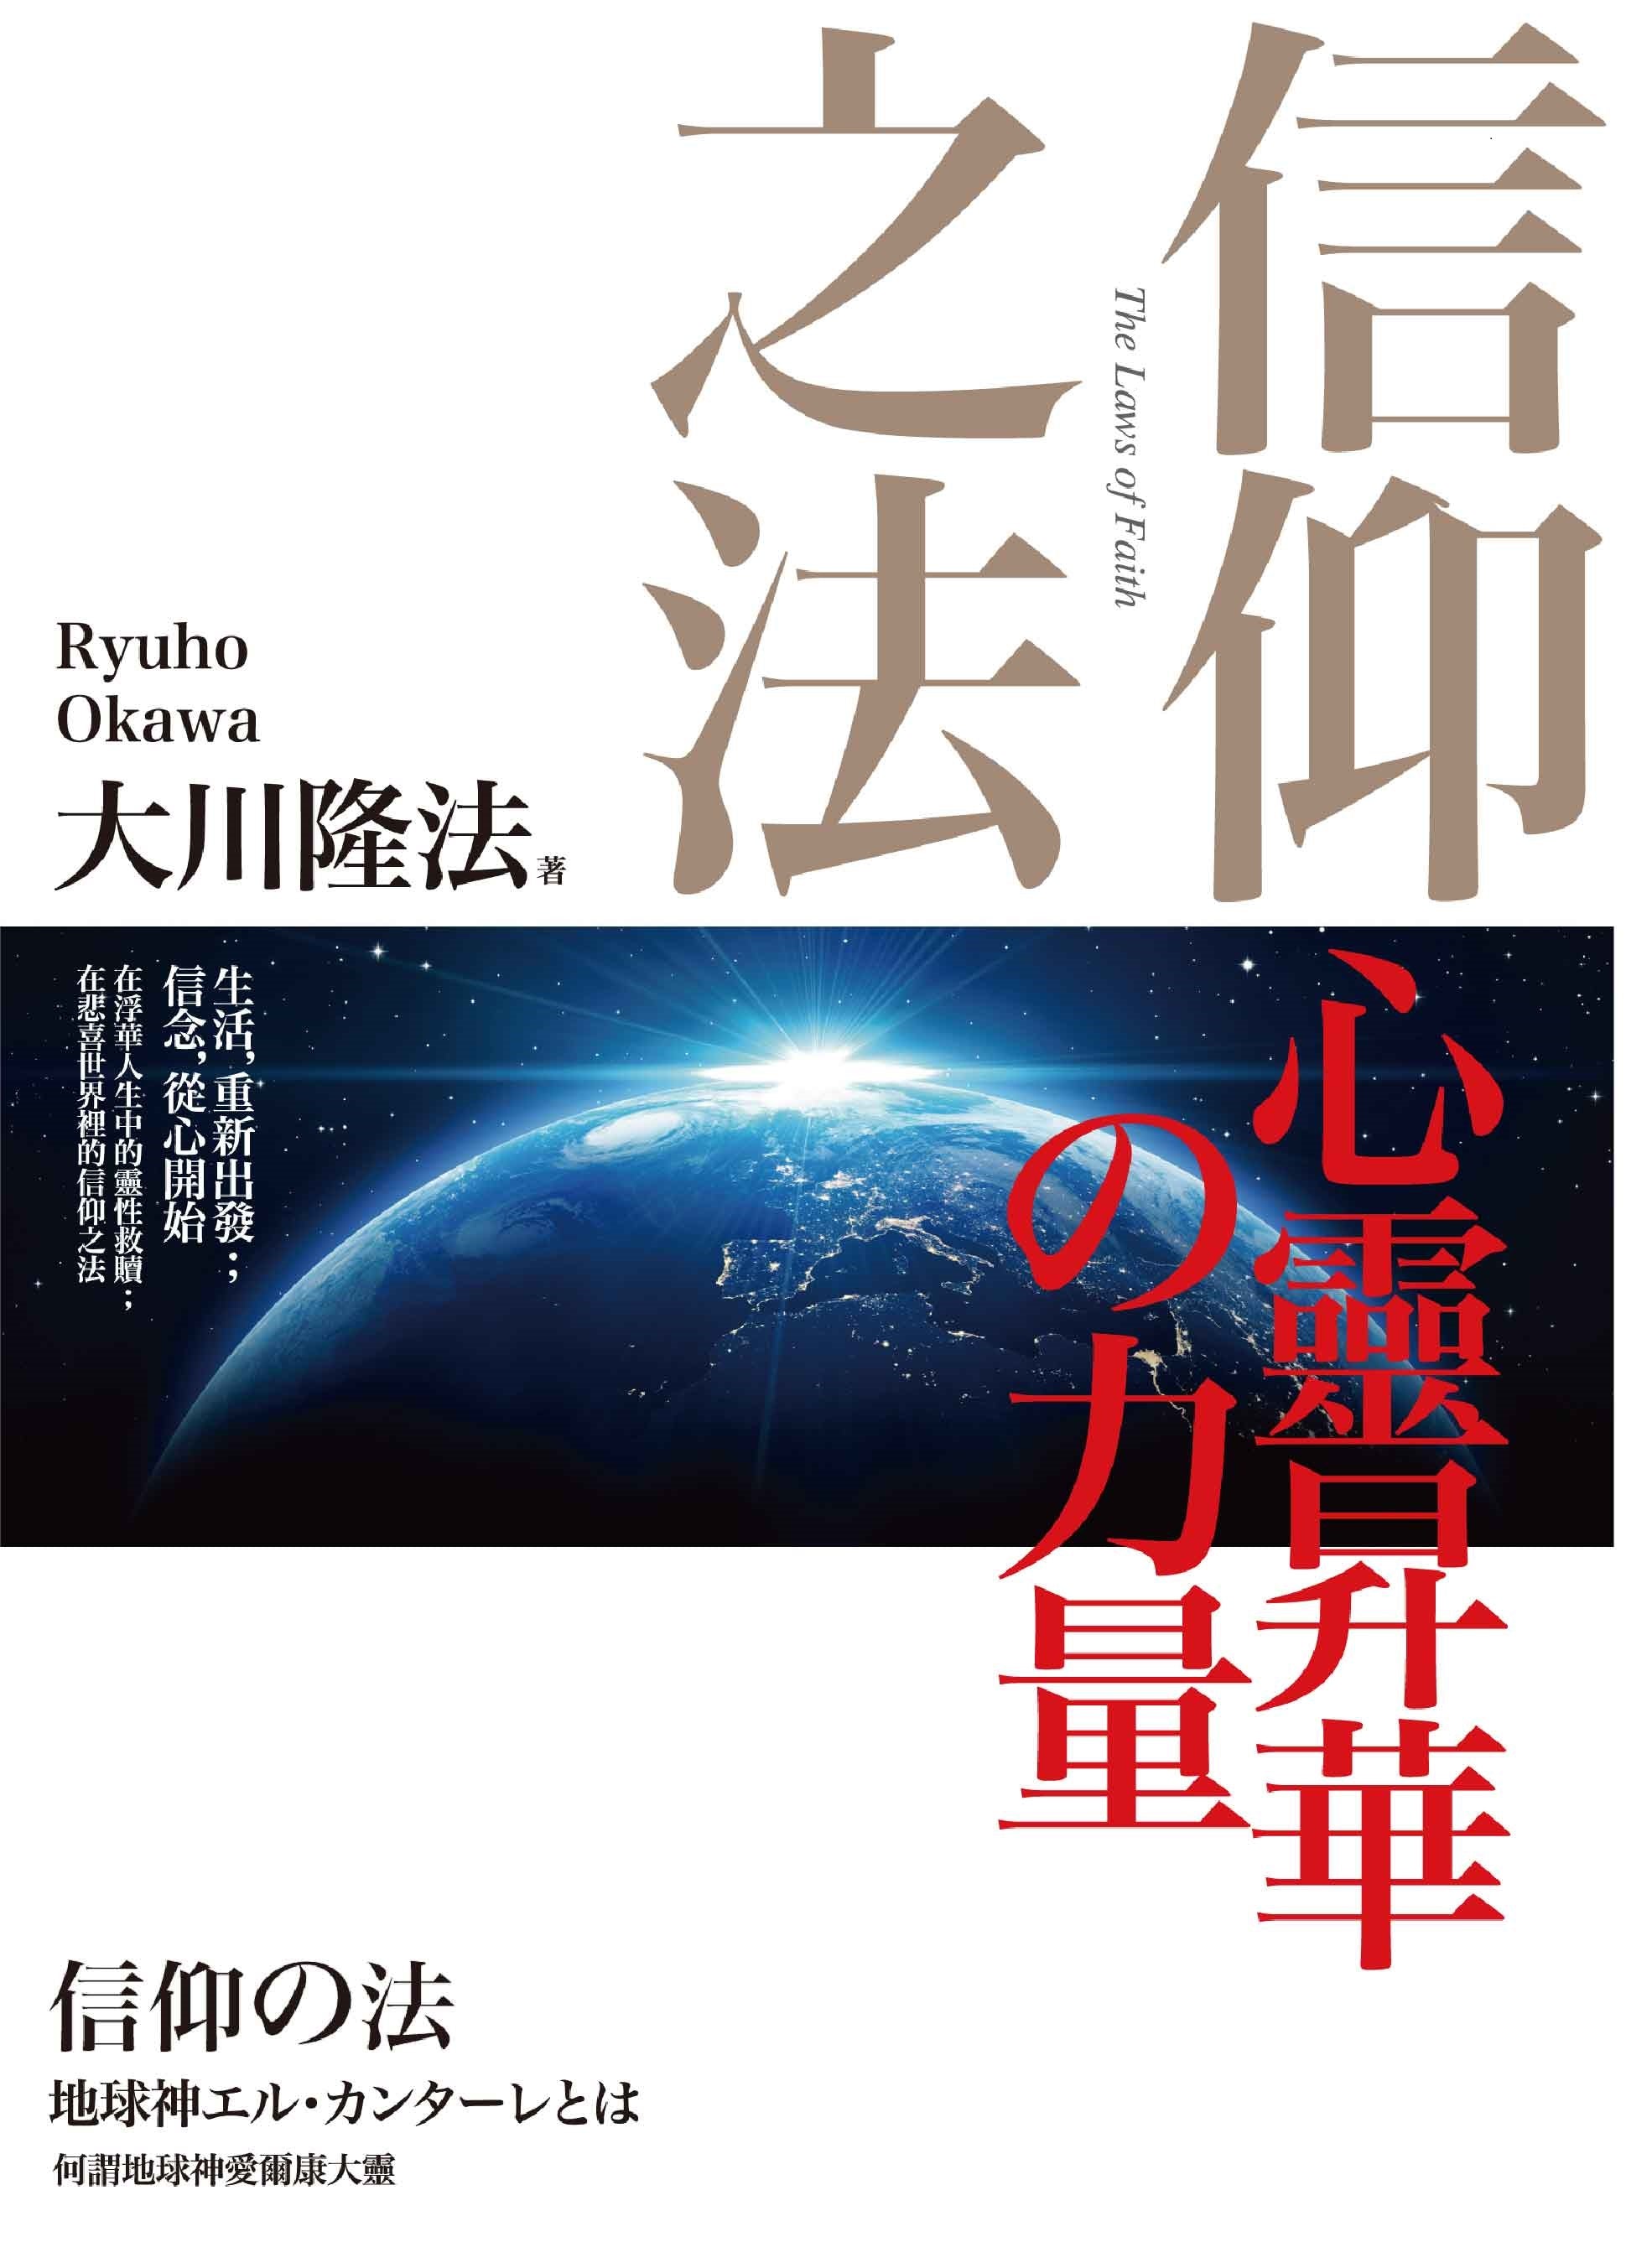 Book, The Laws of Faith : One World Beyond Differences, Ryuho Okawa, Chinese Traditional - IRH Press International